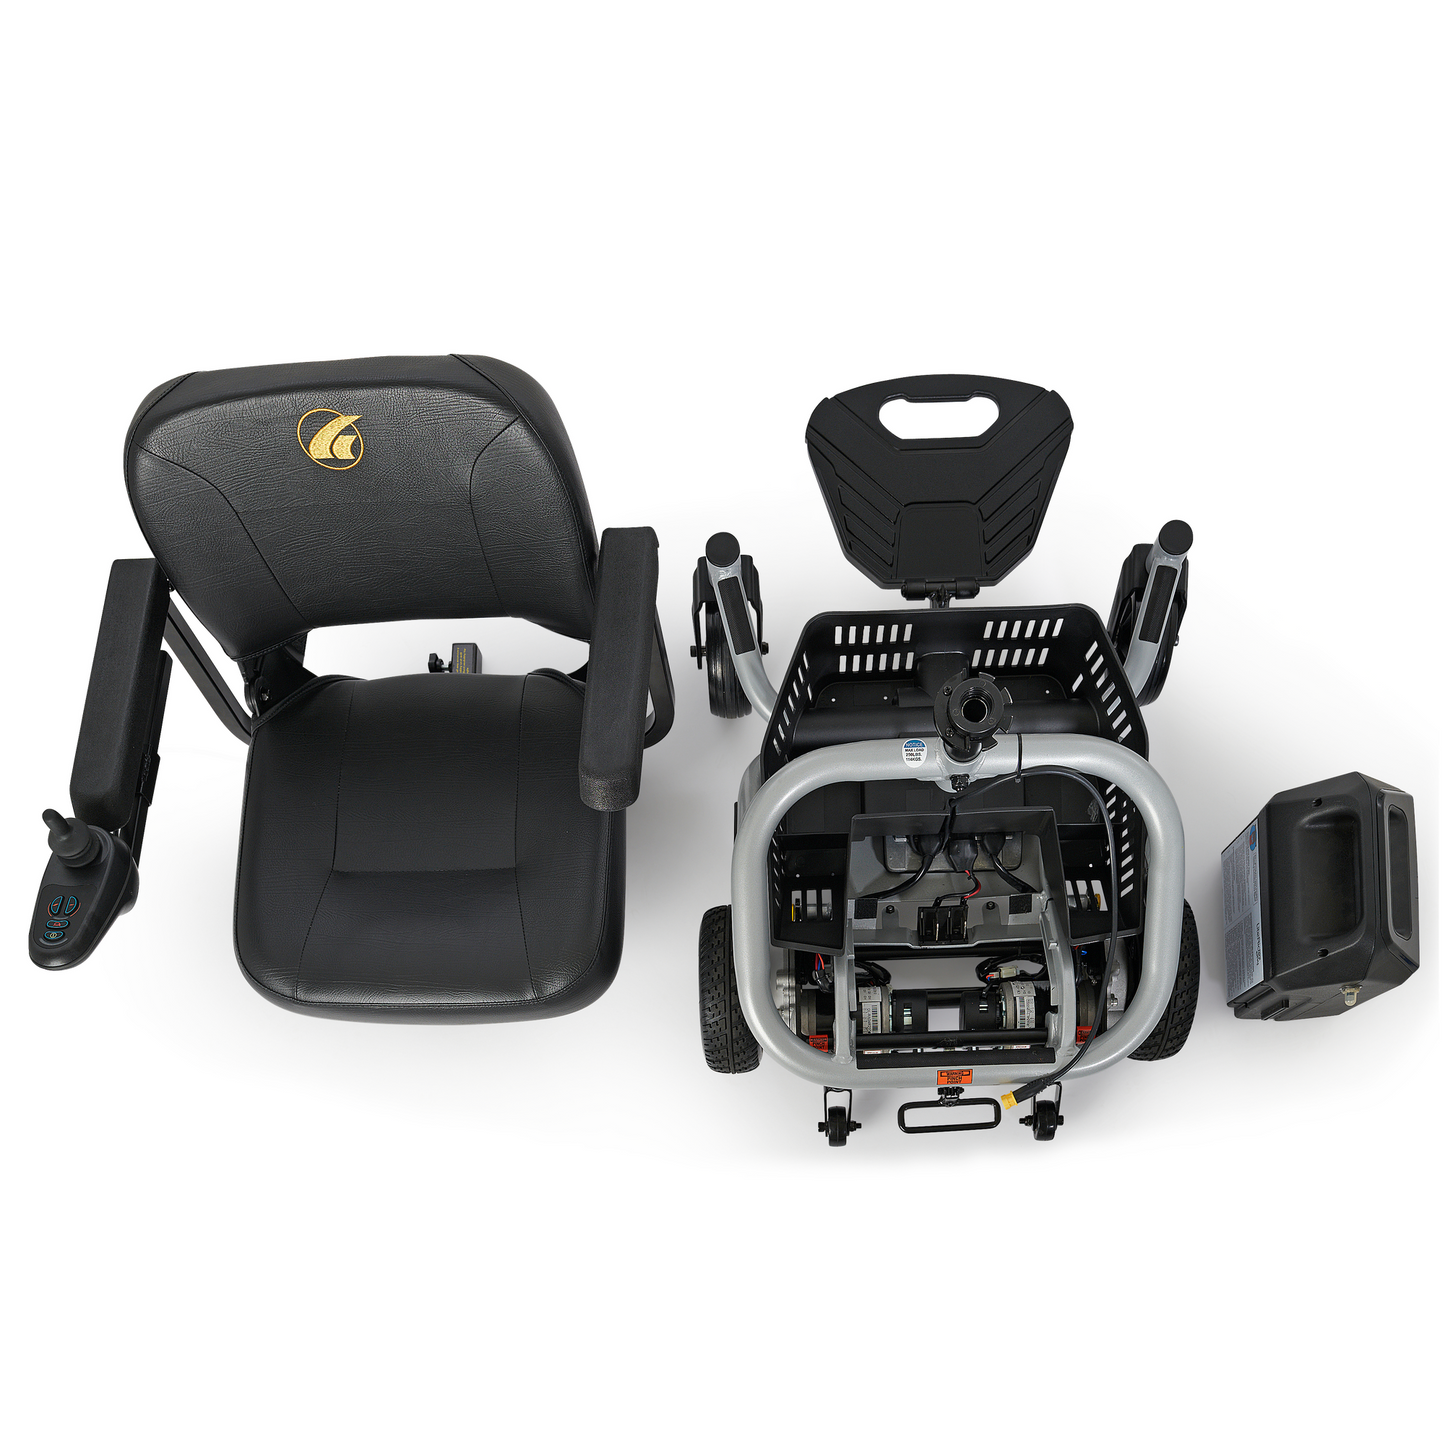 Travel Power Wheelchair - Golden Technologies - LiteRider Envy LT - GB161A - Standard 17"x16" Seat